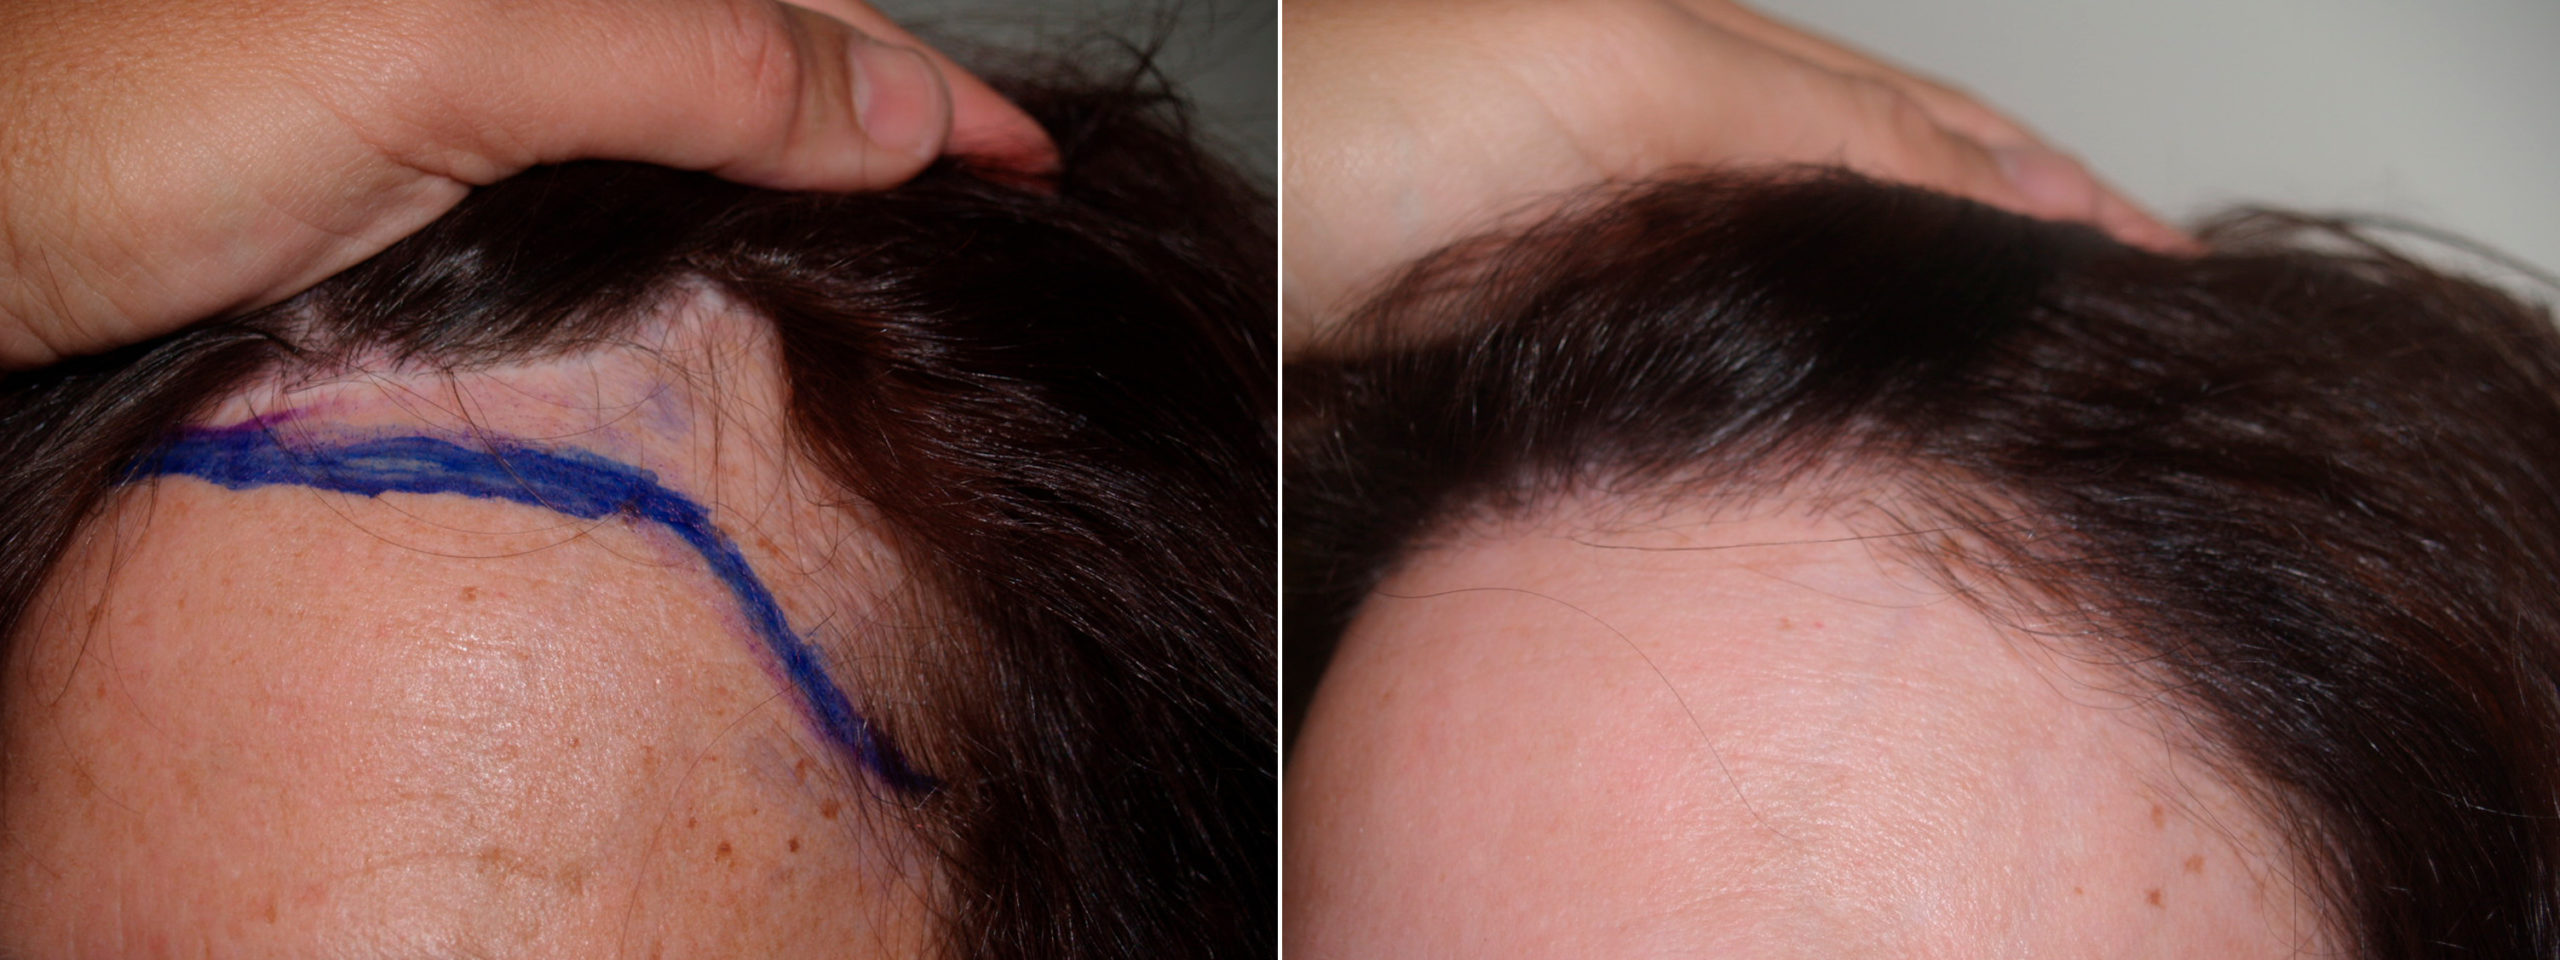 Hair Transplants For Women Photos Miami Fl Patient70923